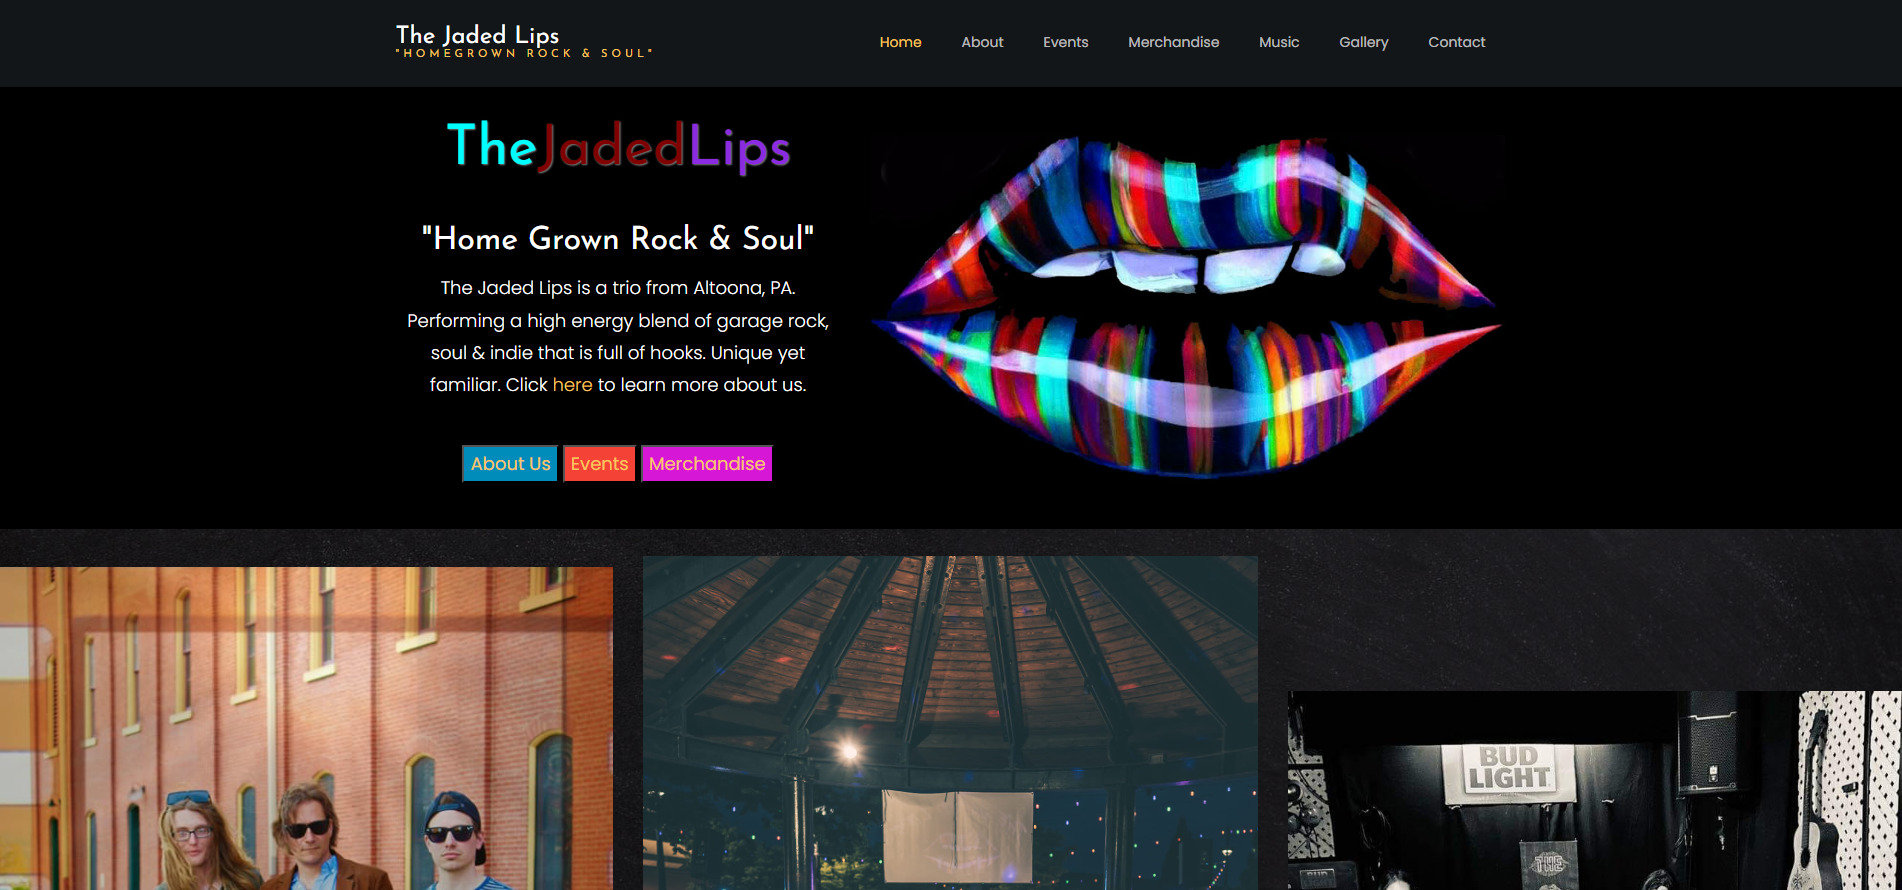 The Jaded Lips Website Image